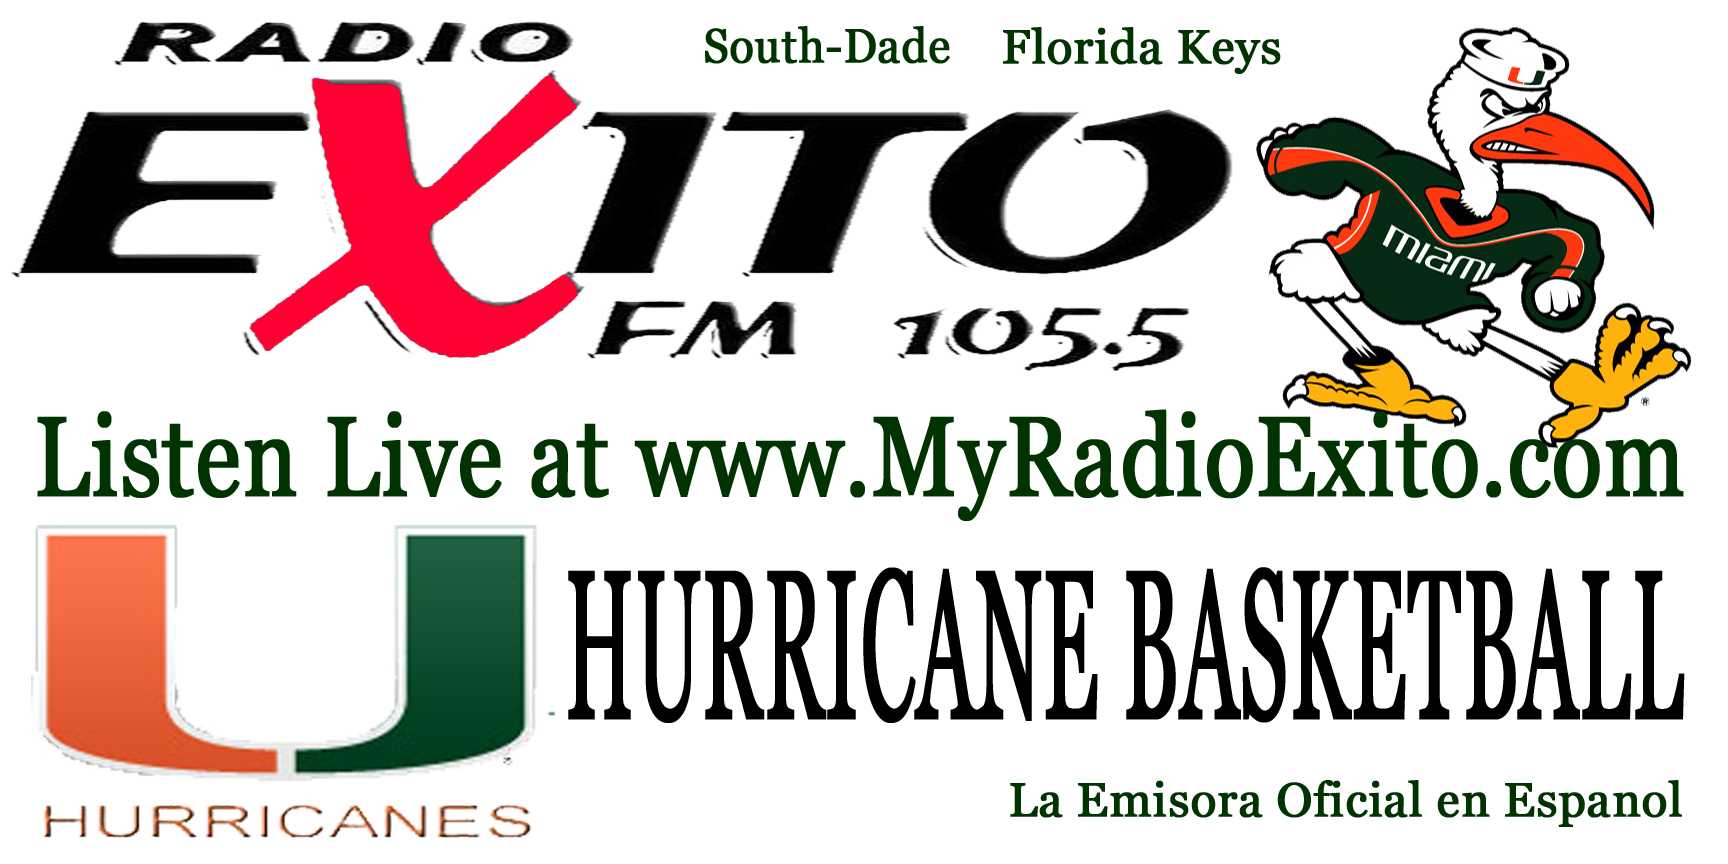 Miami Hurricane Sports is on Radio Exito 105.5